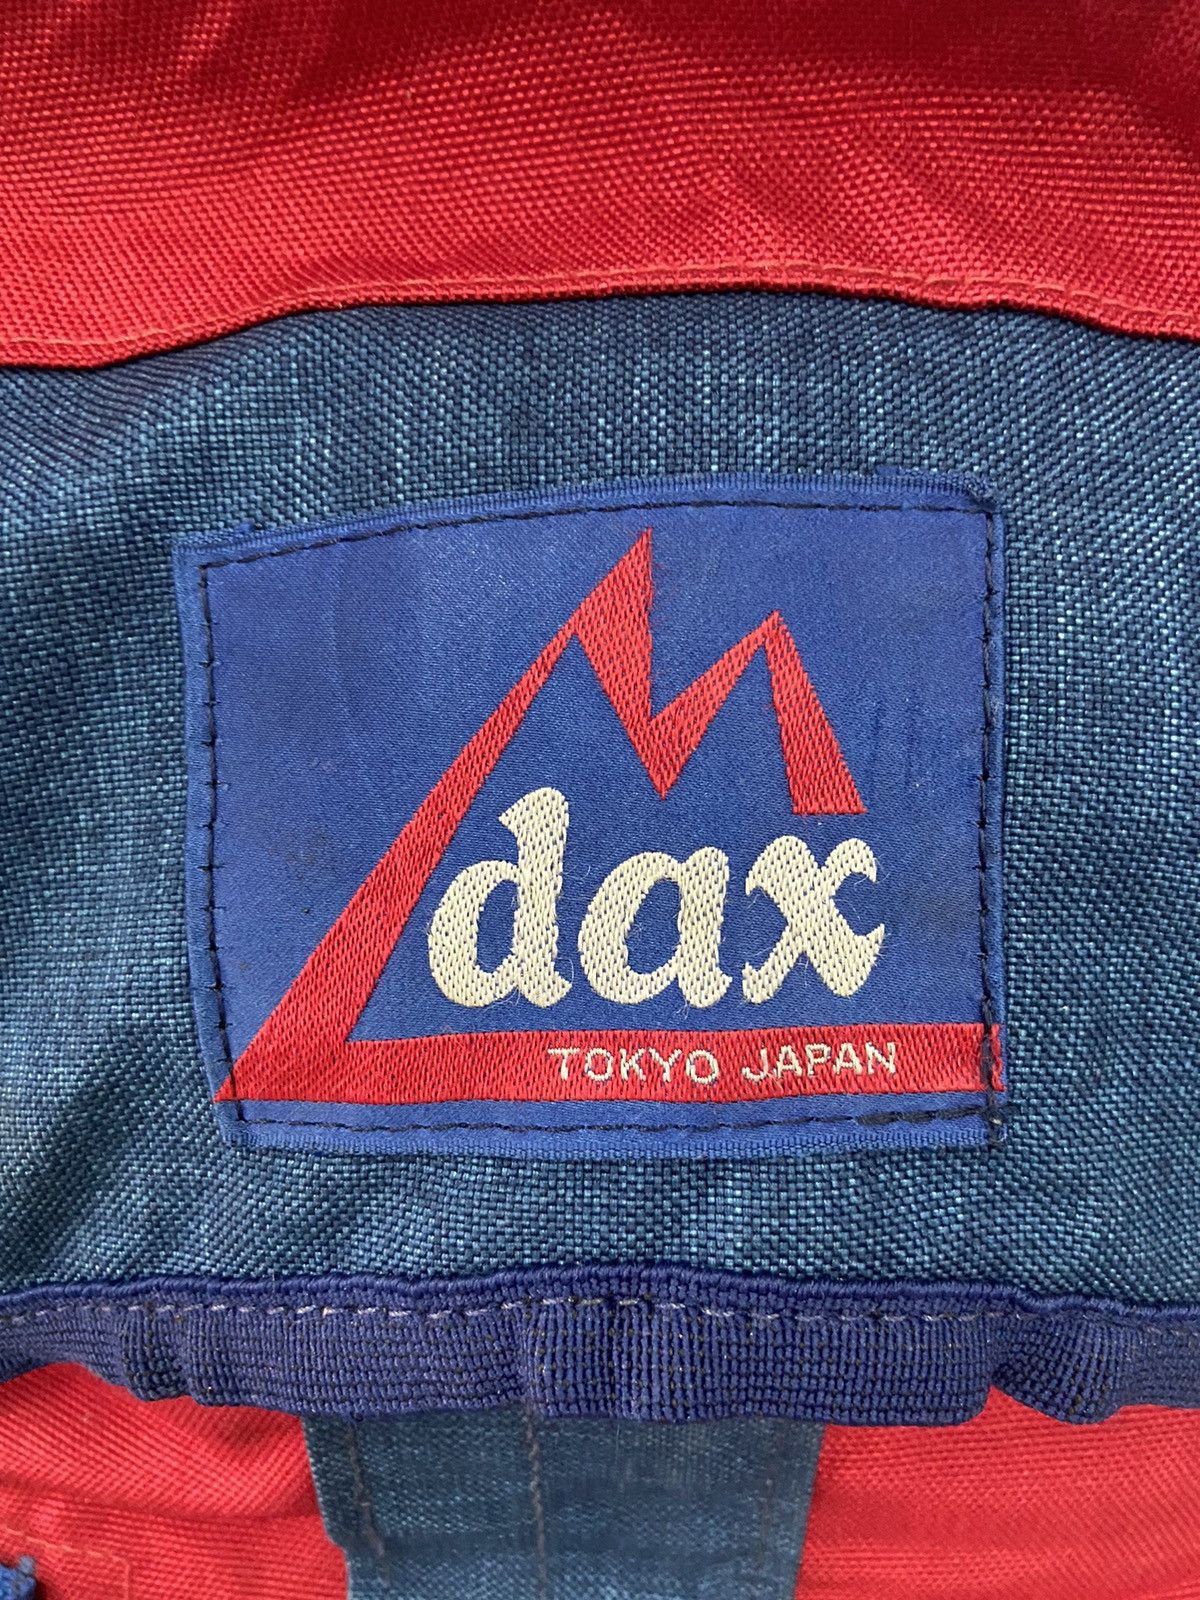 Vintage Dax Tokyo Japan Hiking Bag - 5